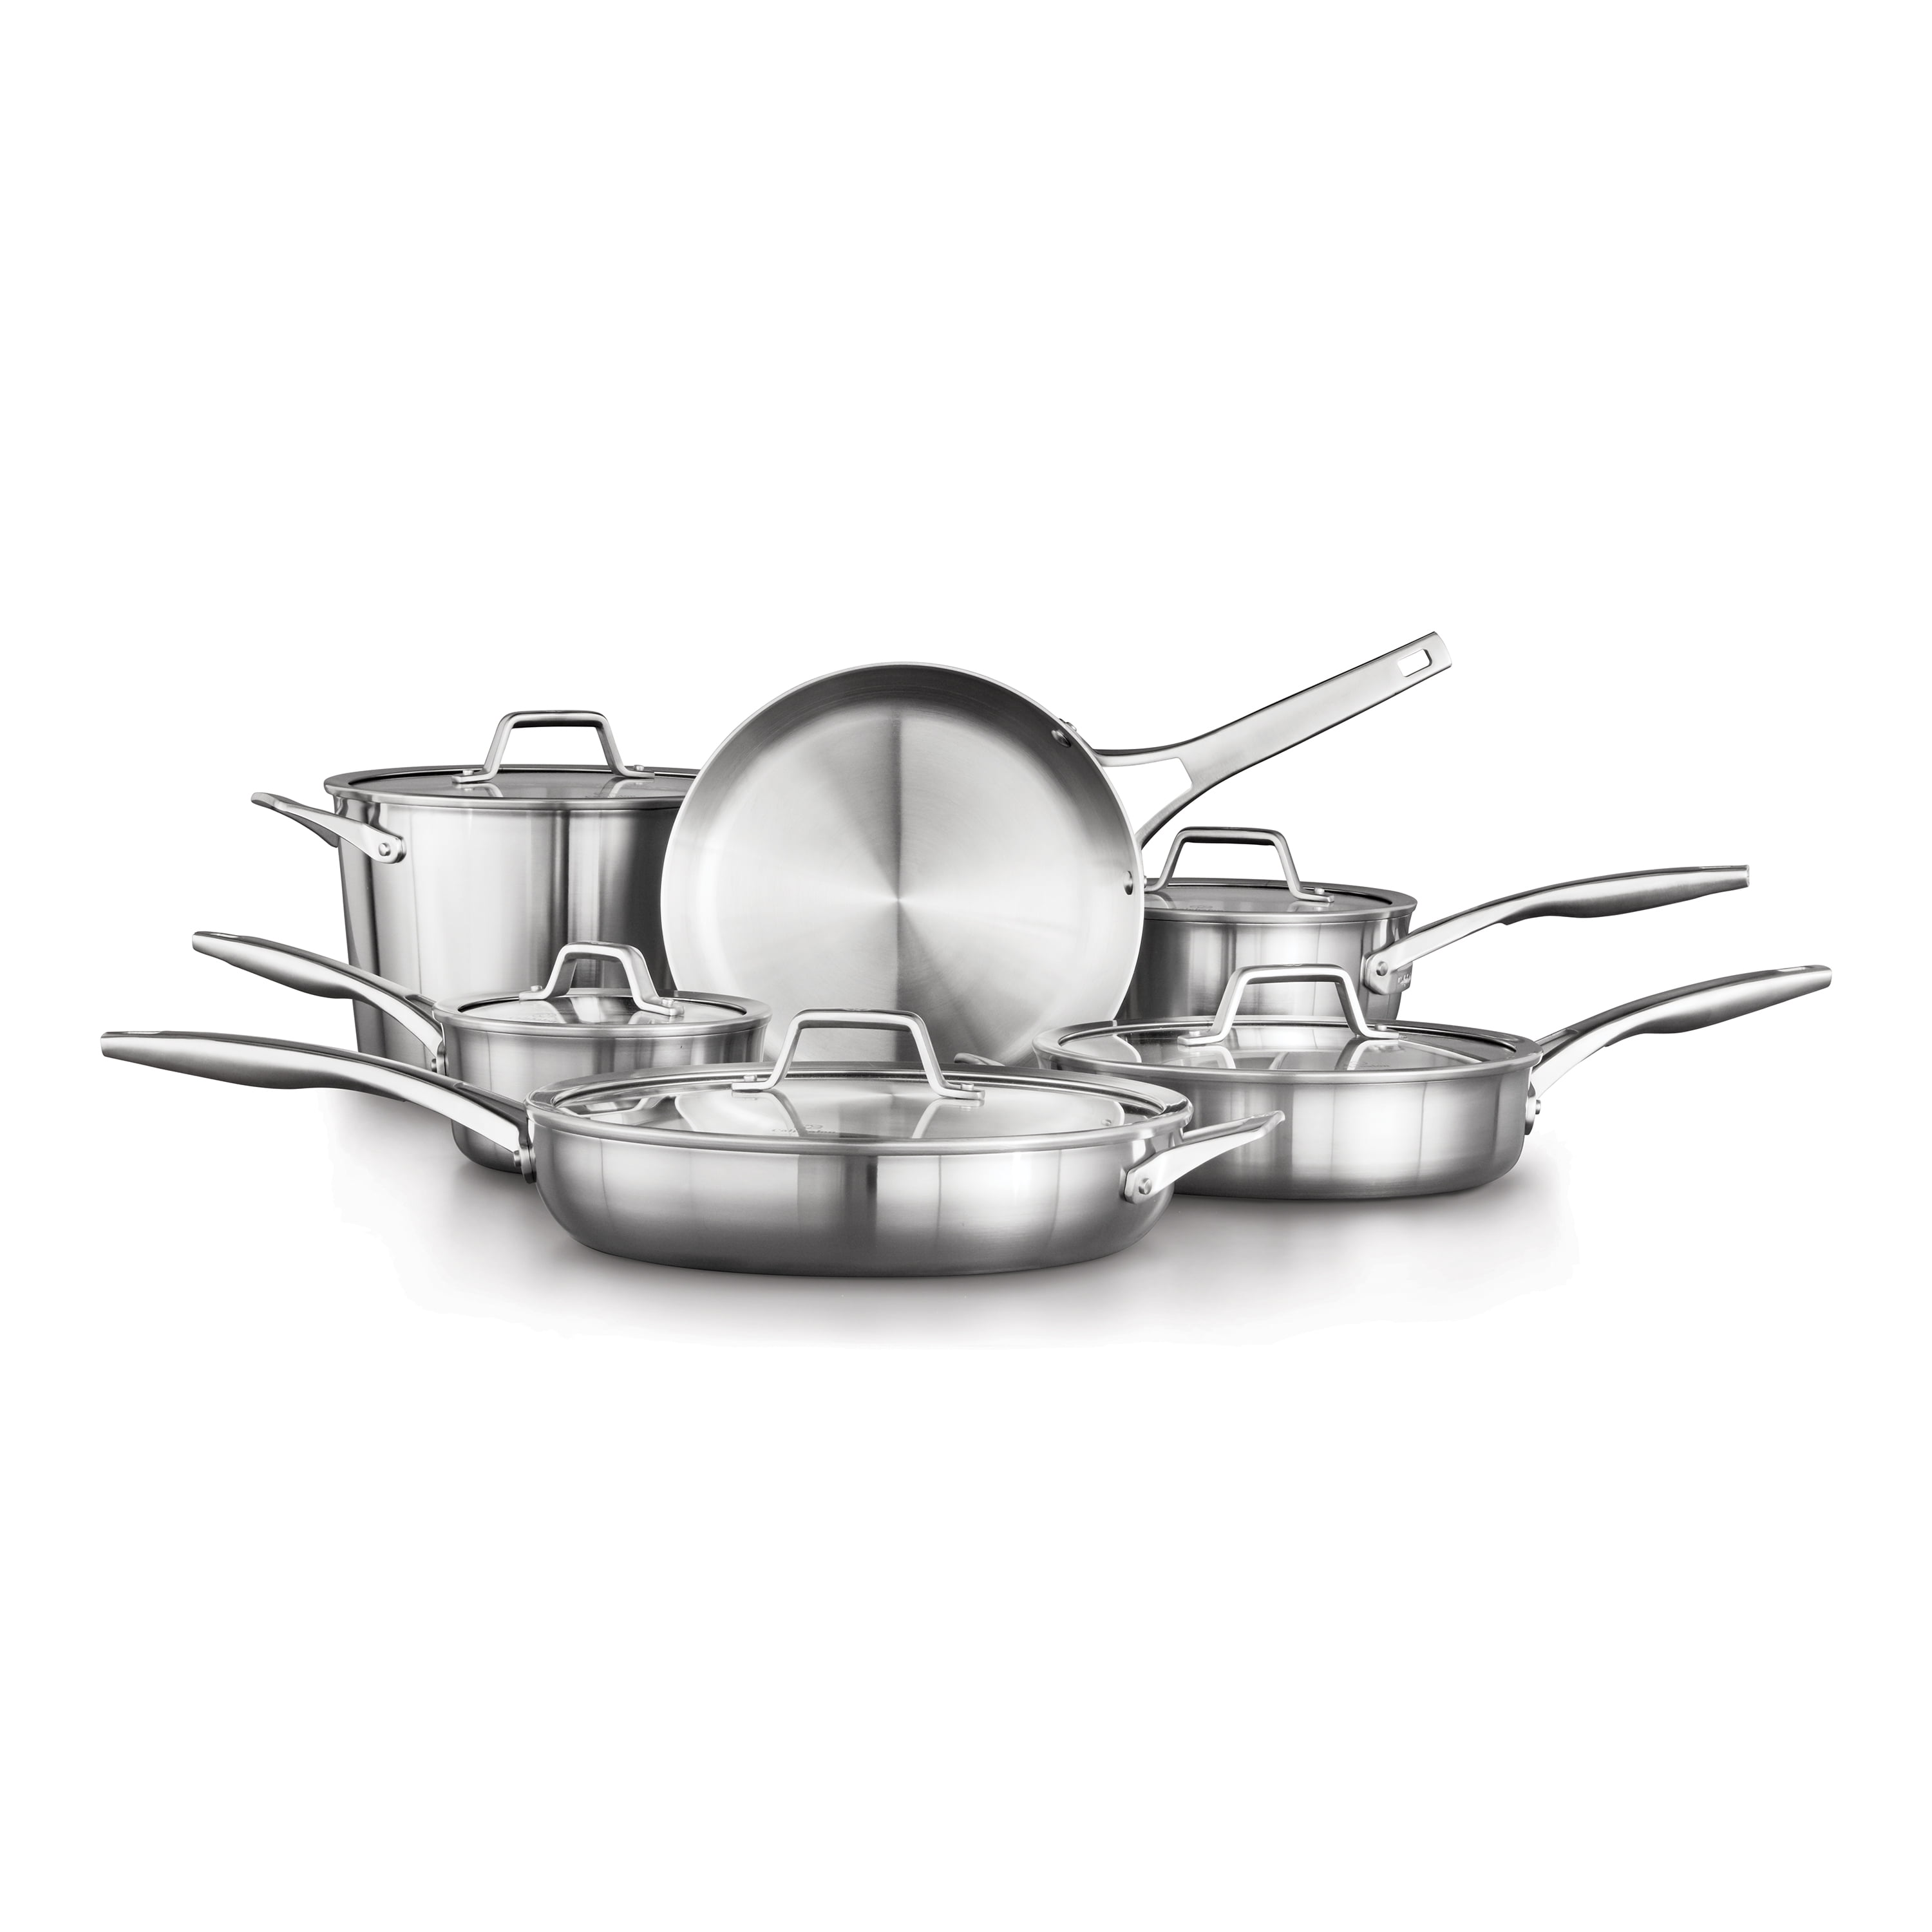 Can Calphalon Pans Go in the Oven?: Exploring Cookware Versatility